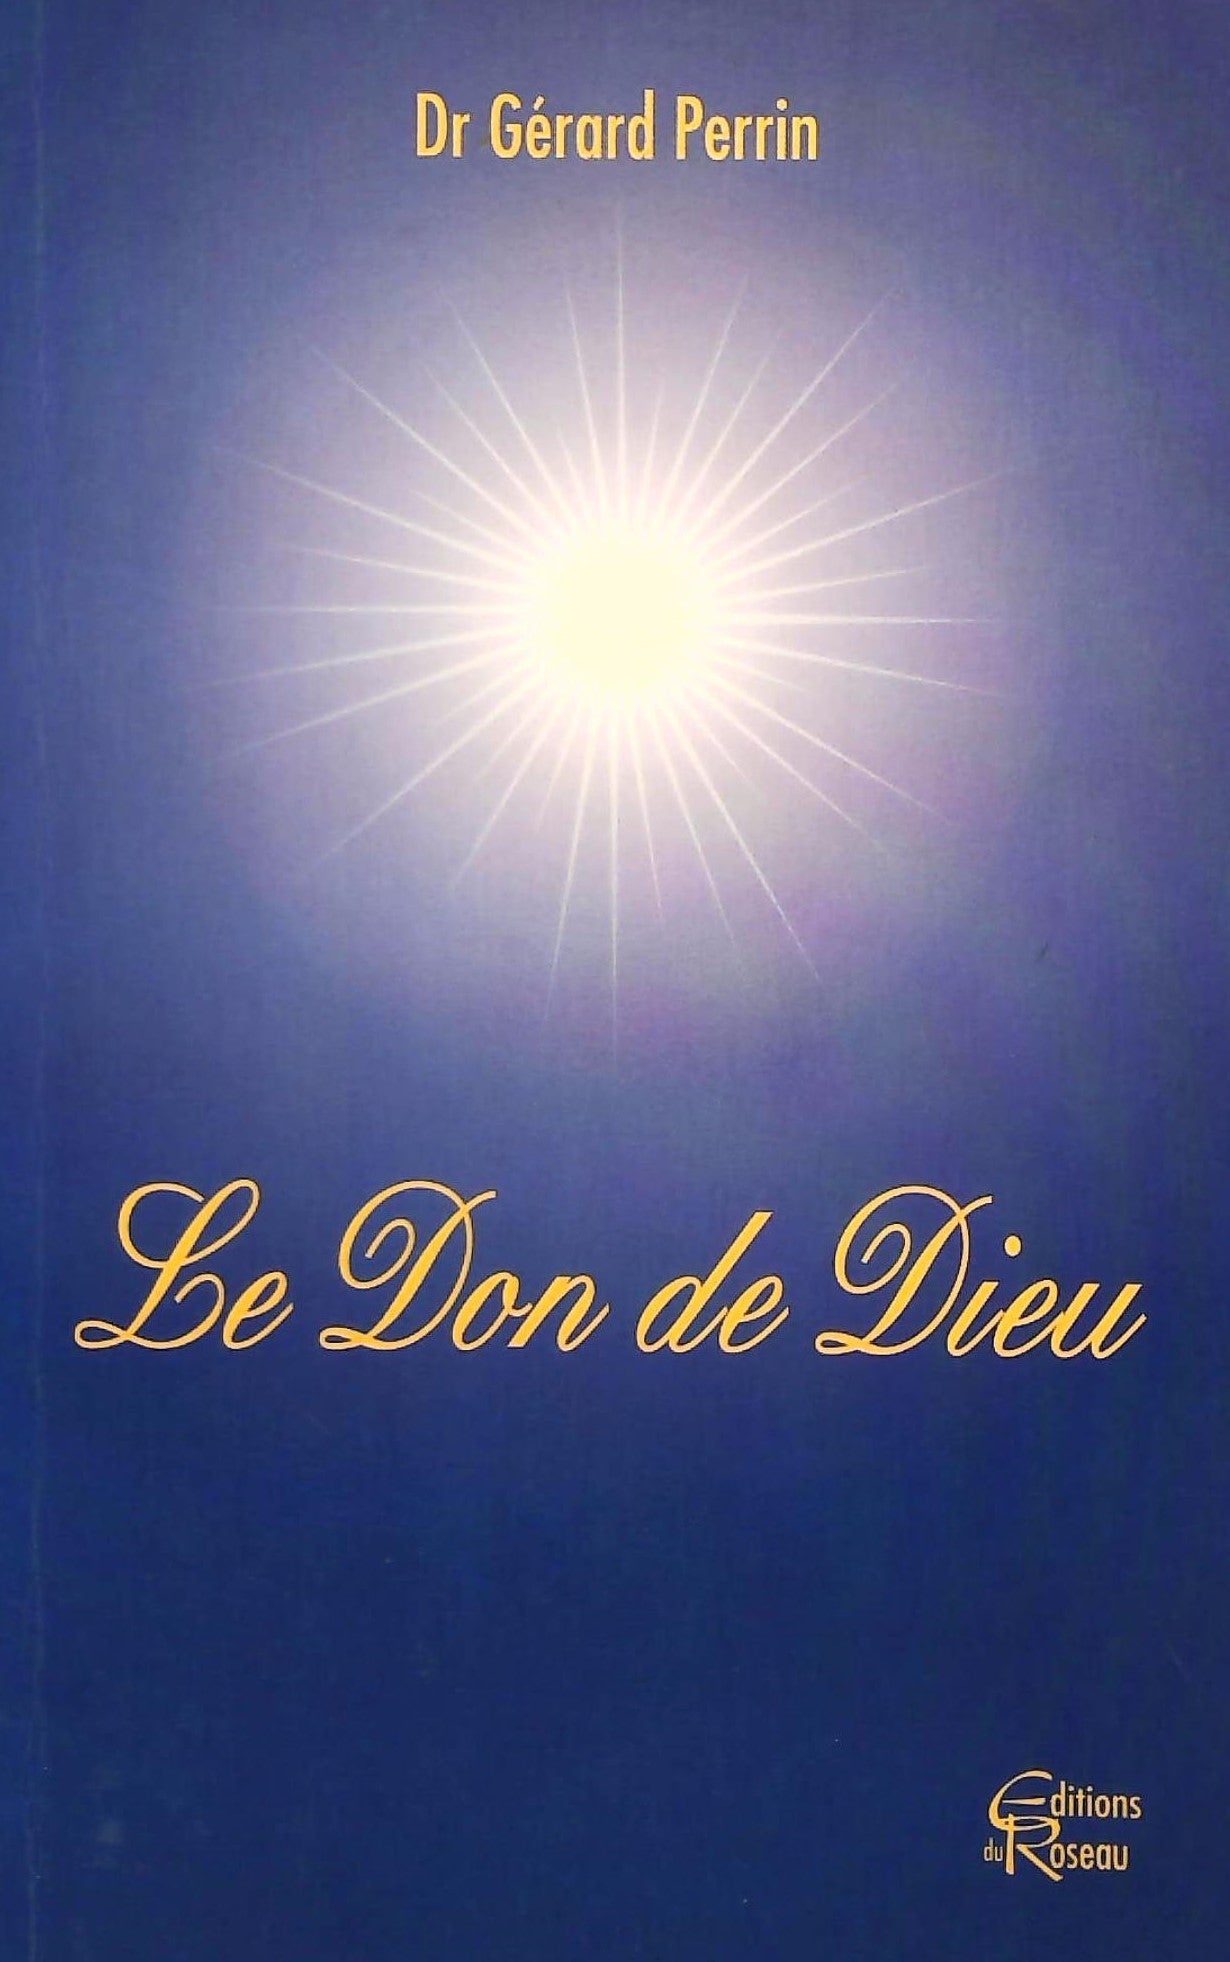 Livre ISBN 2950802214 Le don de Dieu (Dr Gérard Perrin)